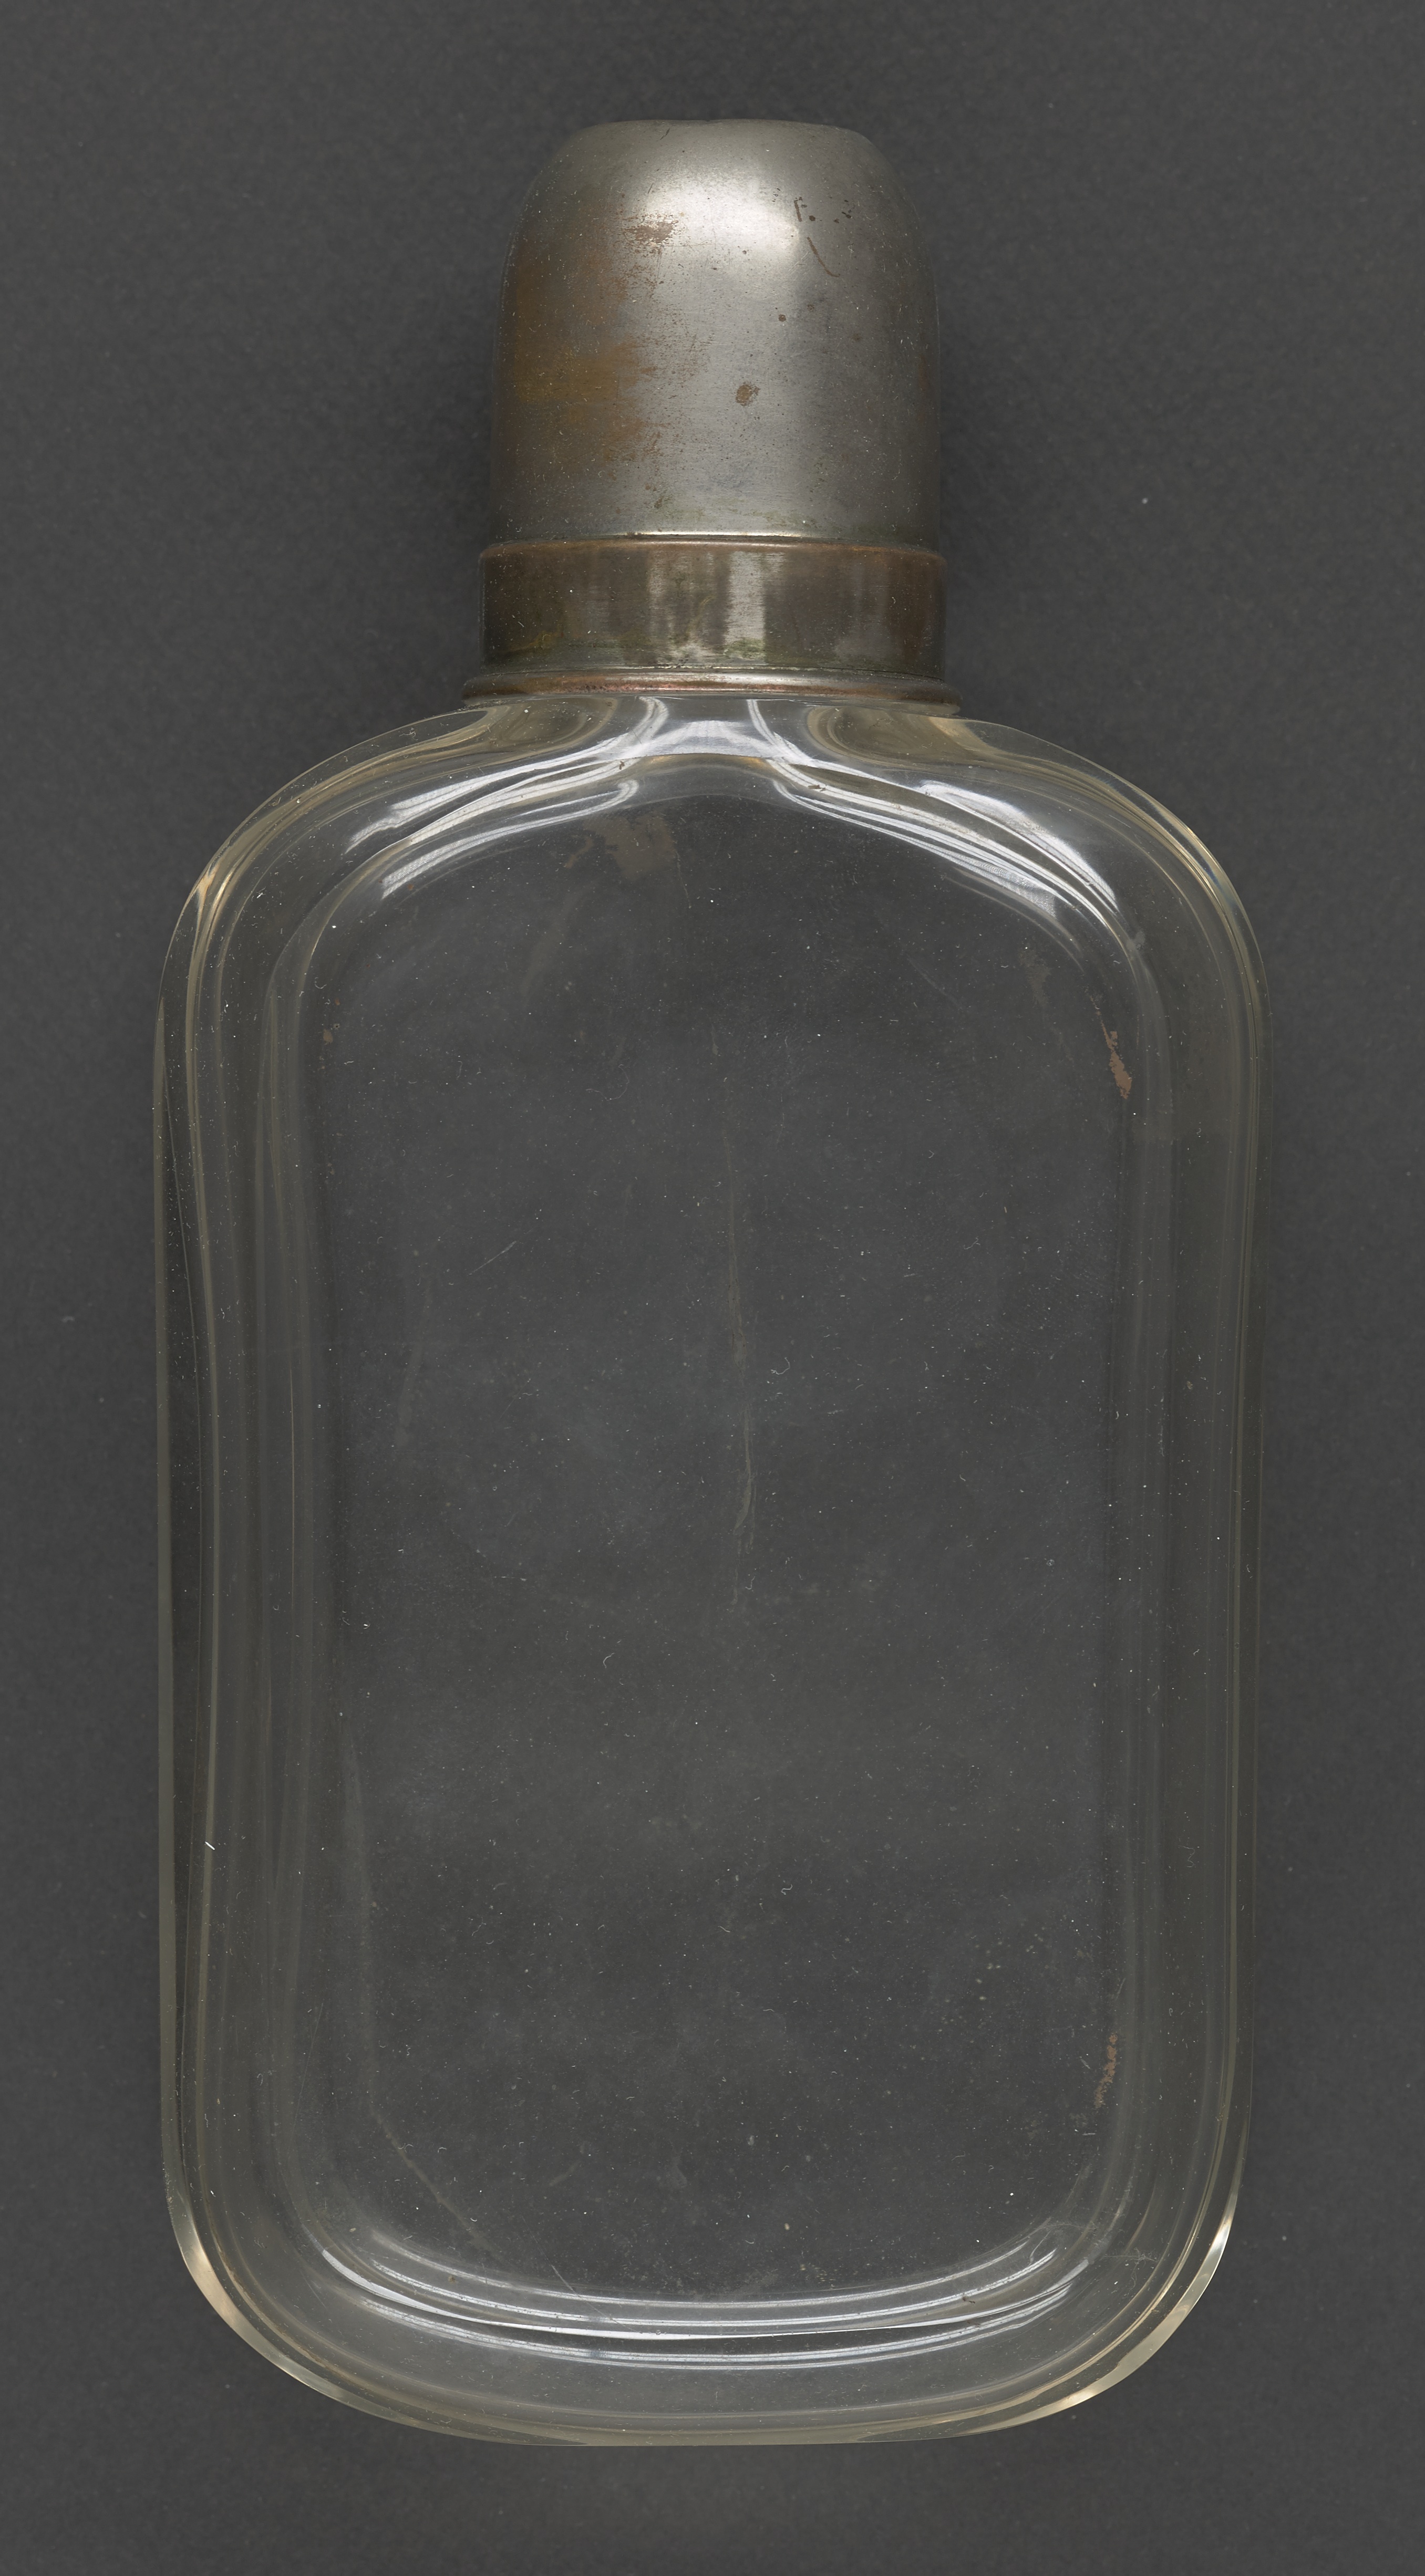 Charles Dicken's flask